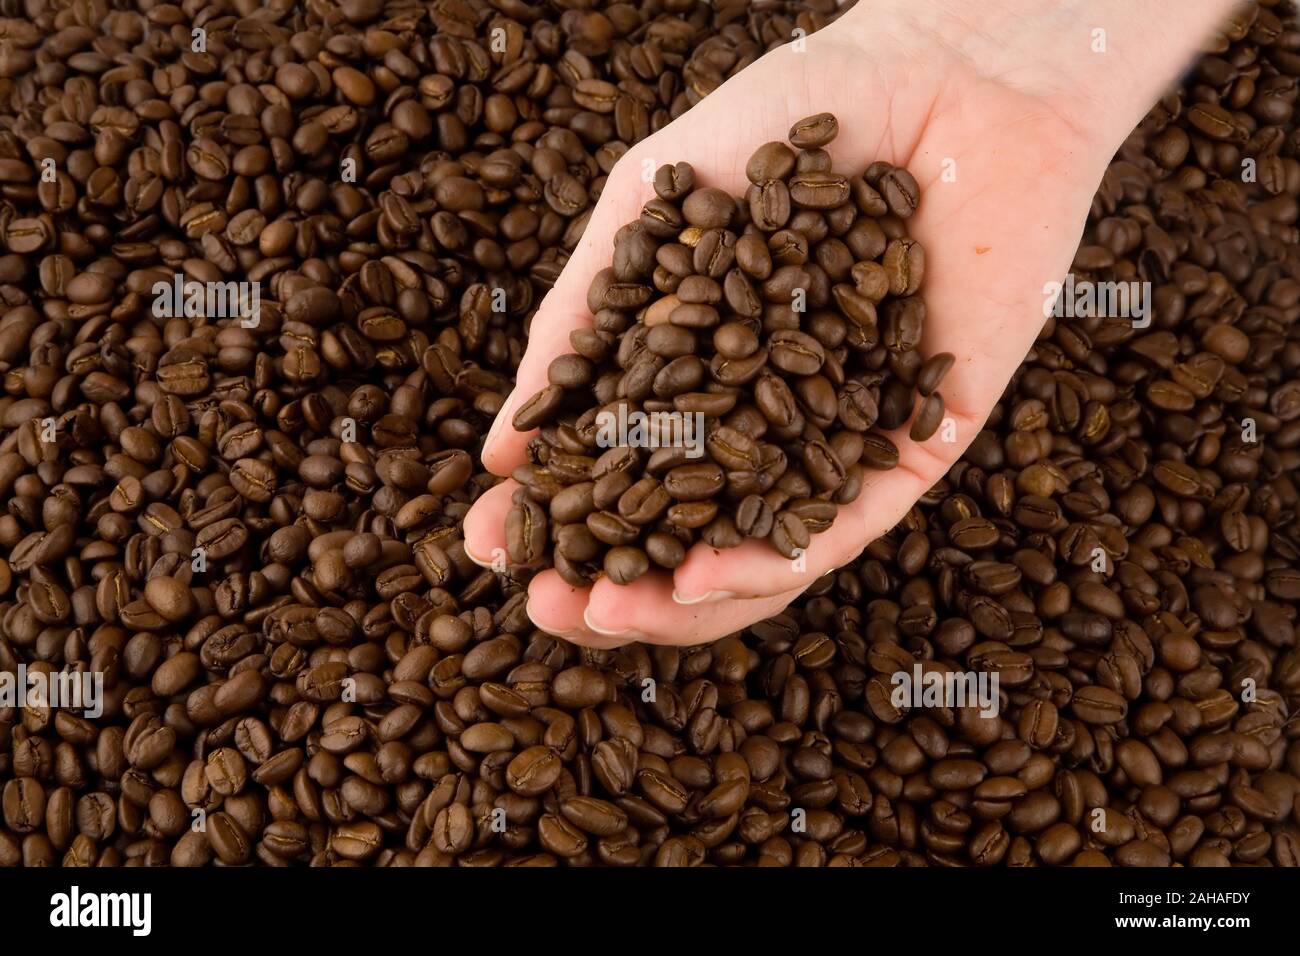 Kaffeebohnen, Kaffee, Coffee beans, Stock Photo